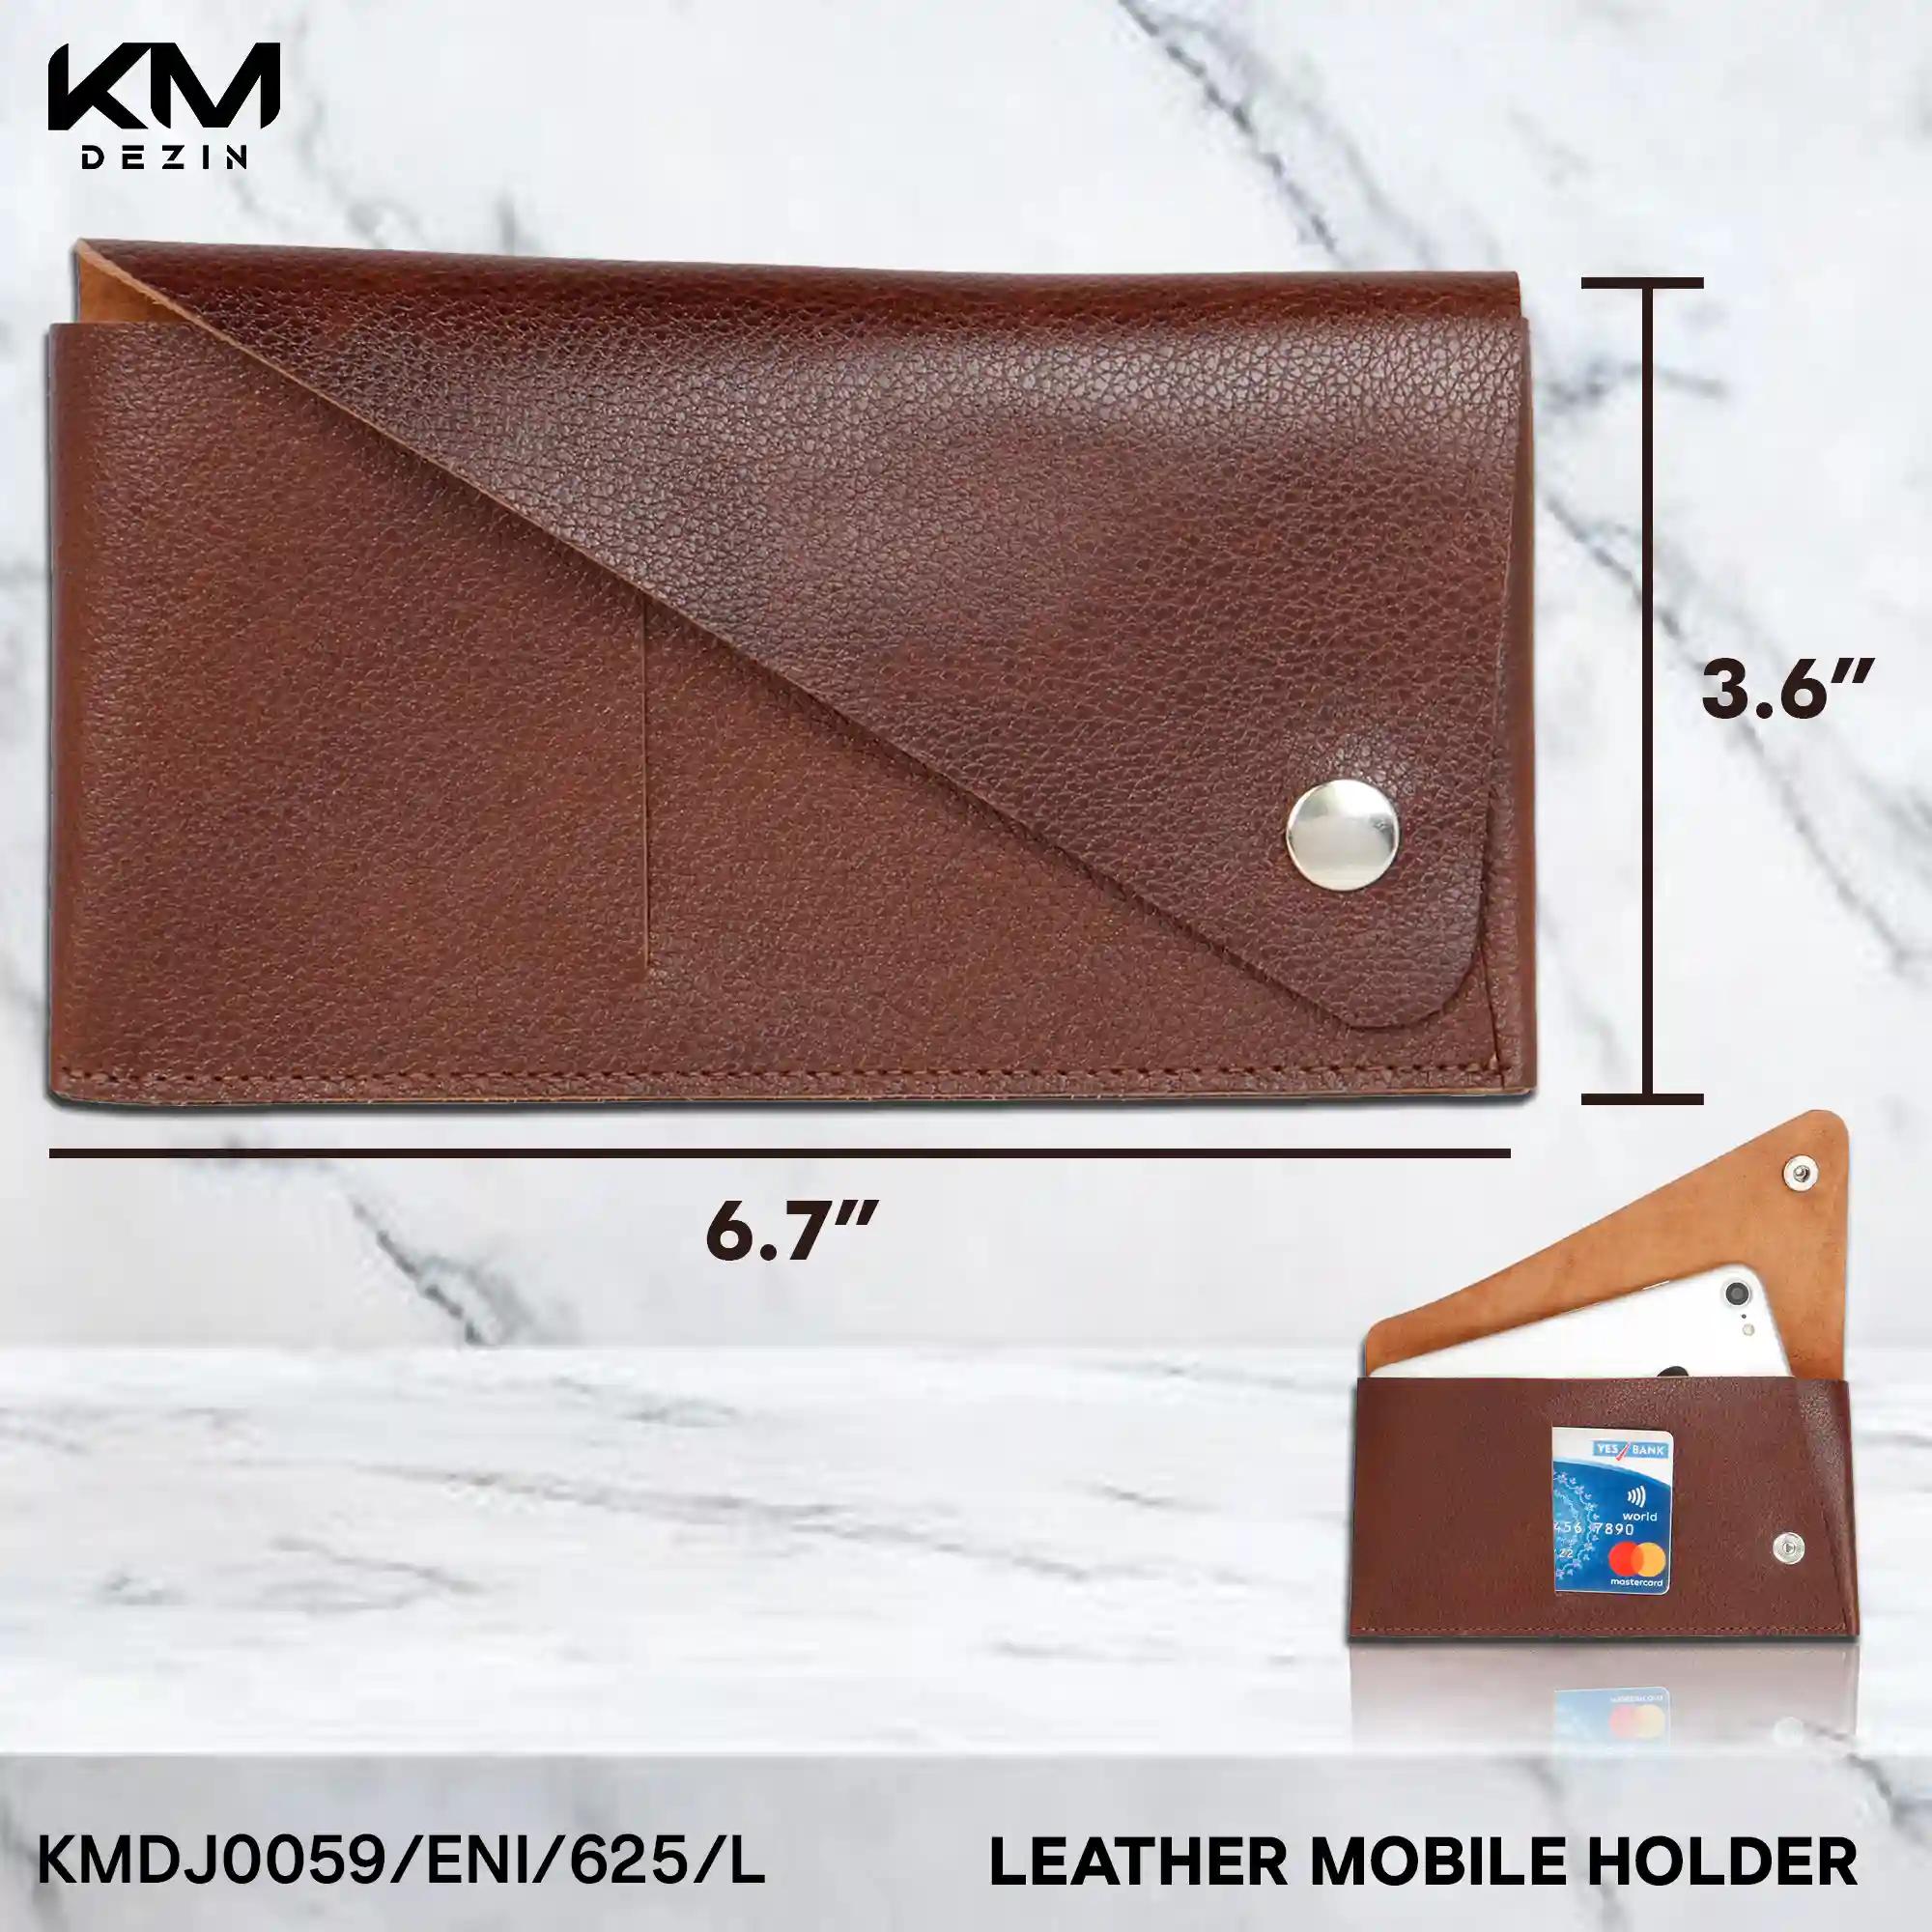 Leather Mobile Holder